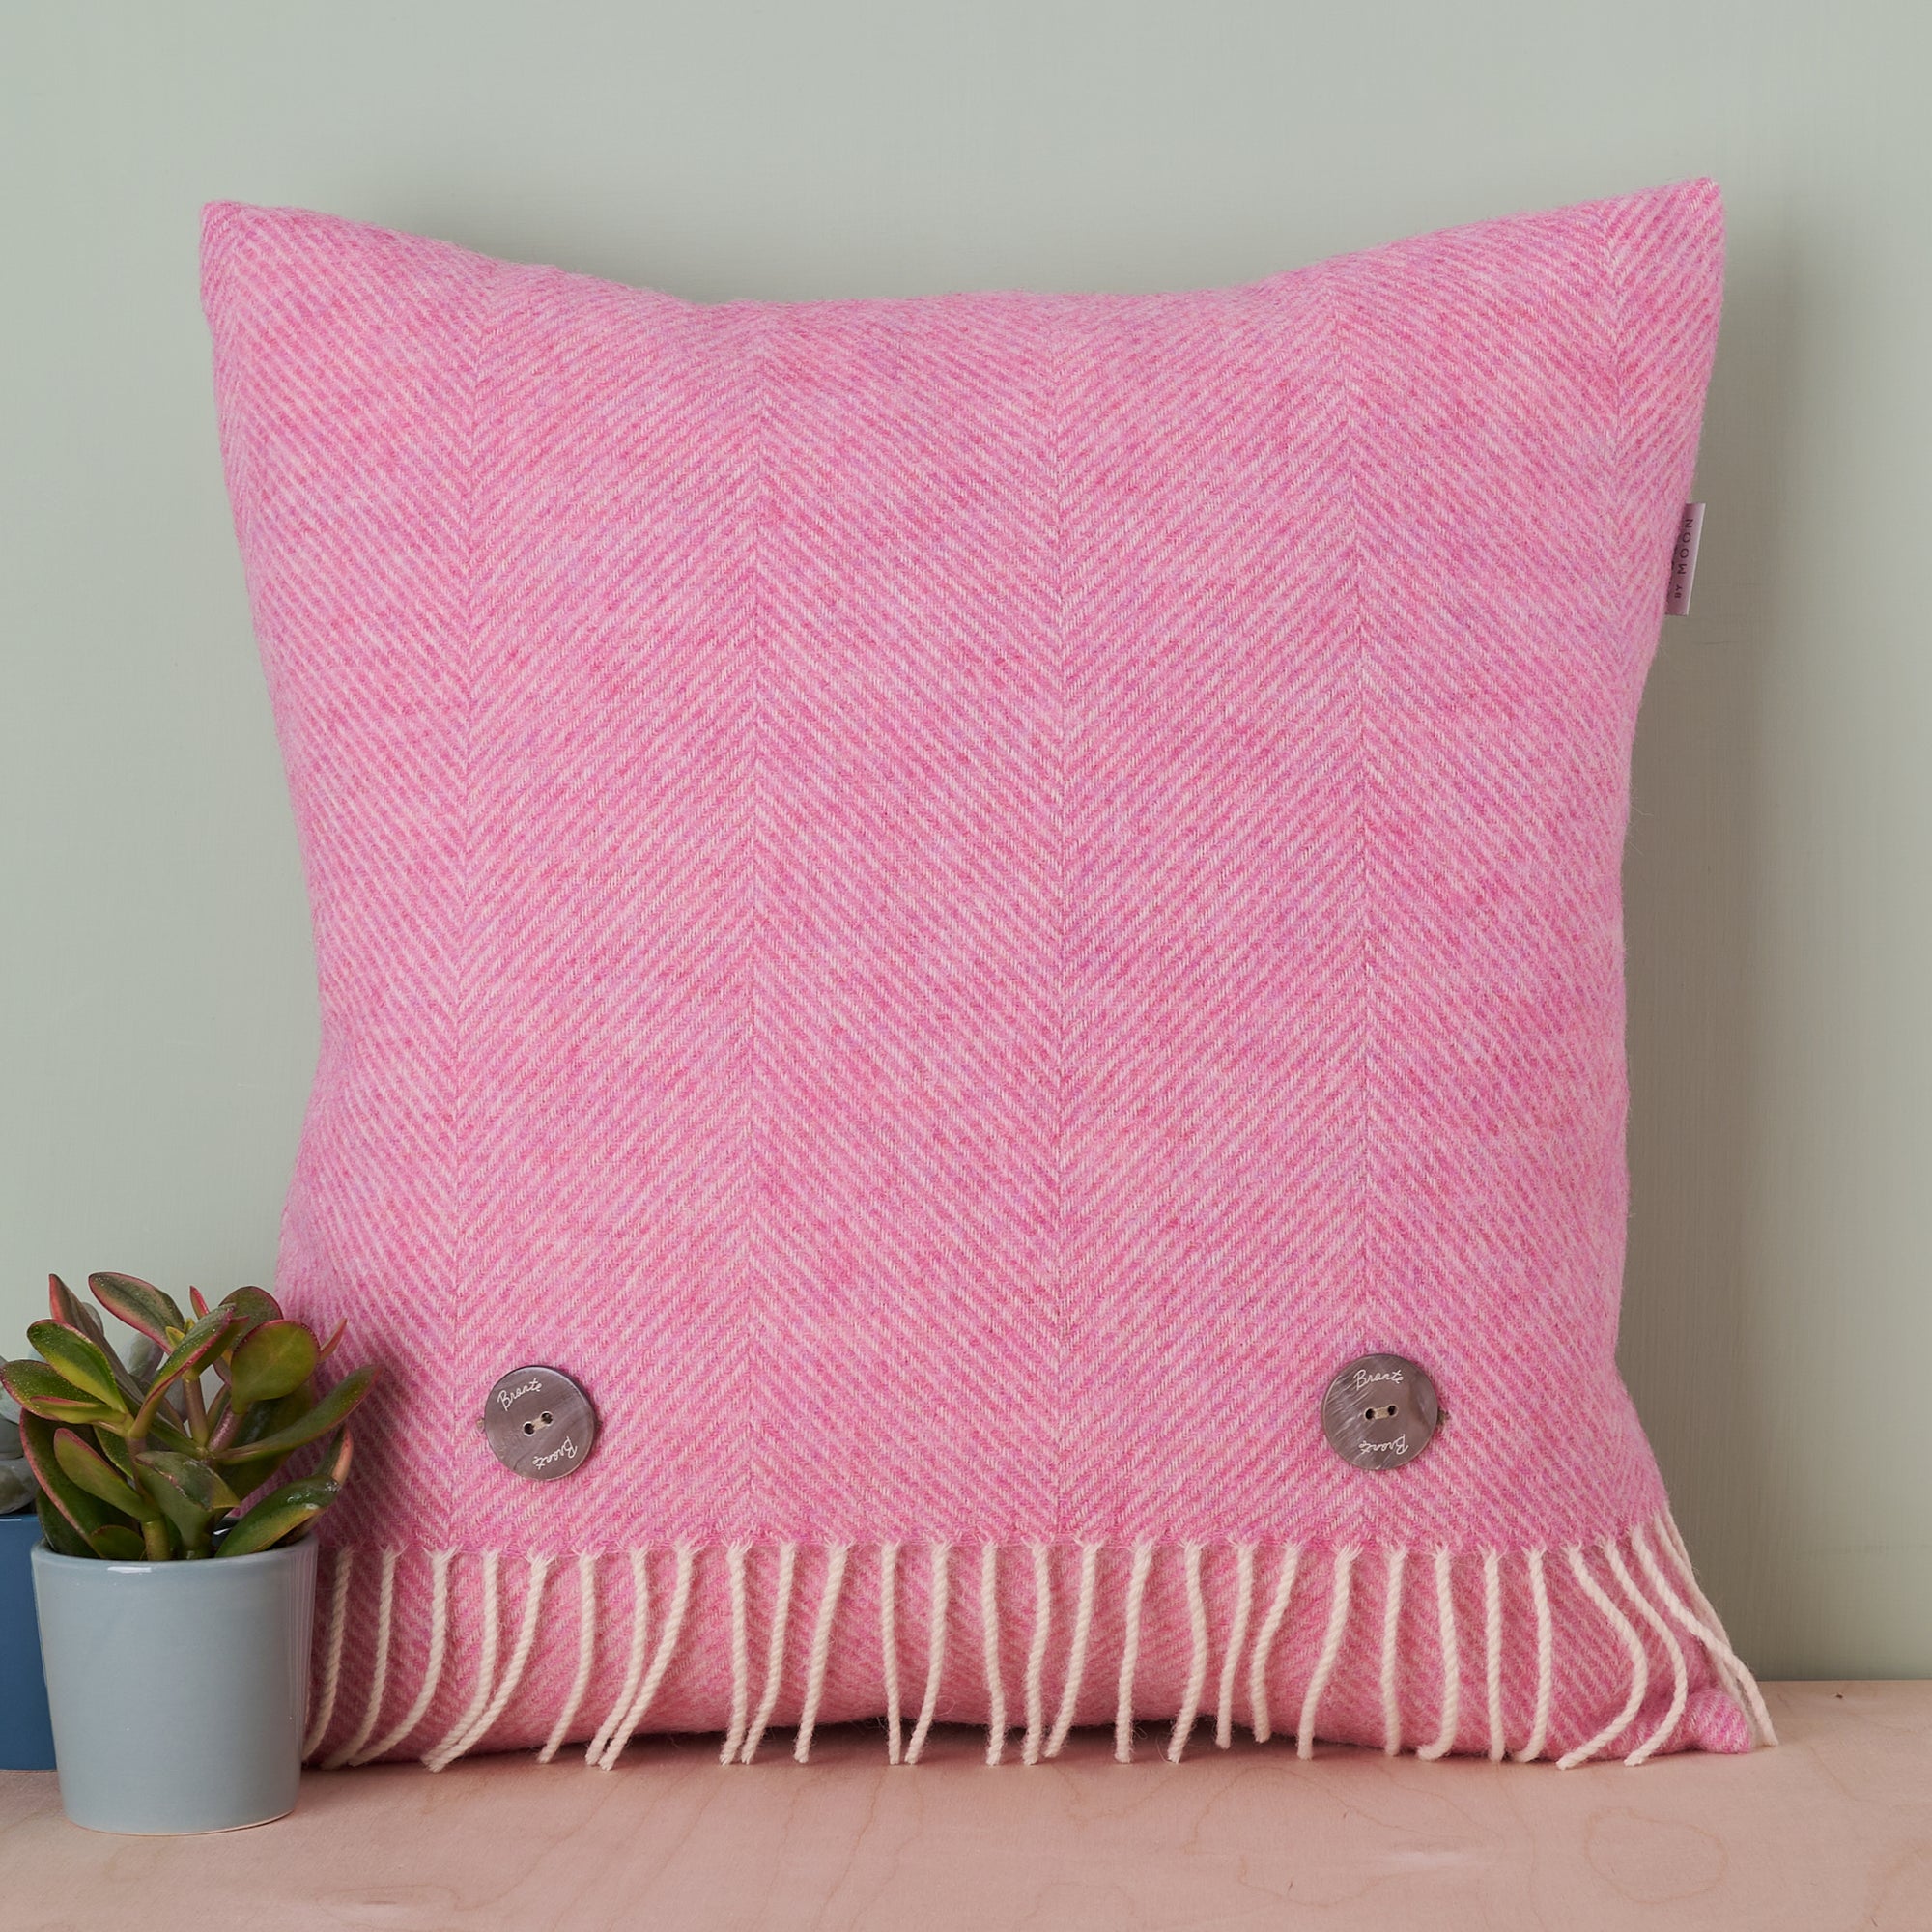 Bronte by Moon Pale Pink Herringbone Shetland Wool Cushion